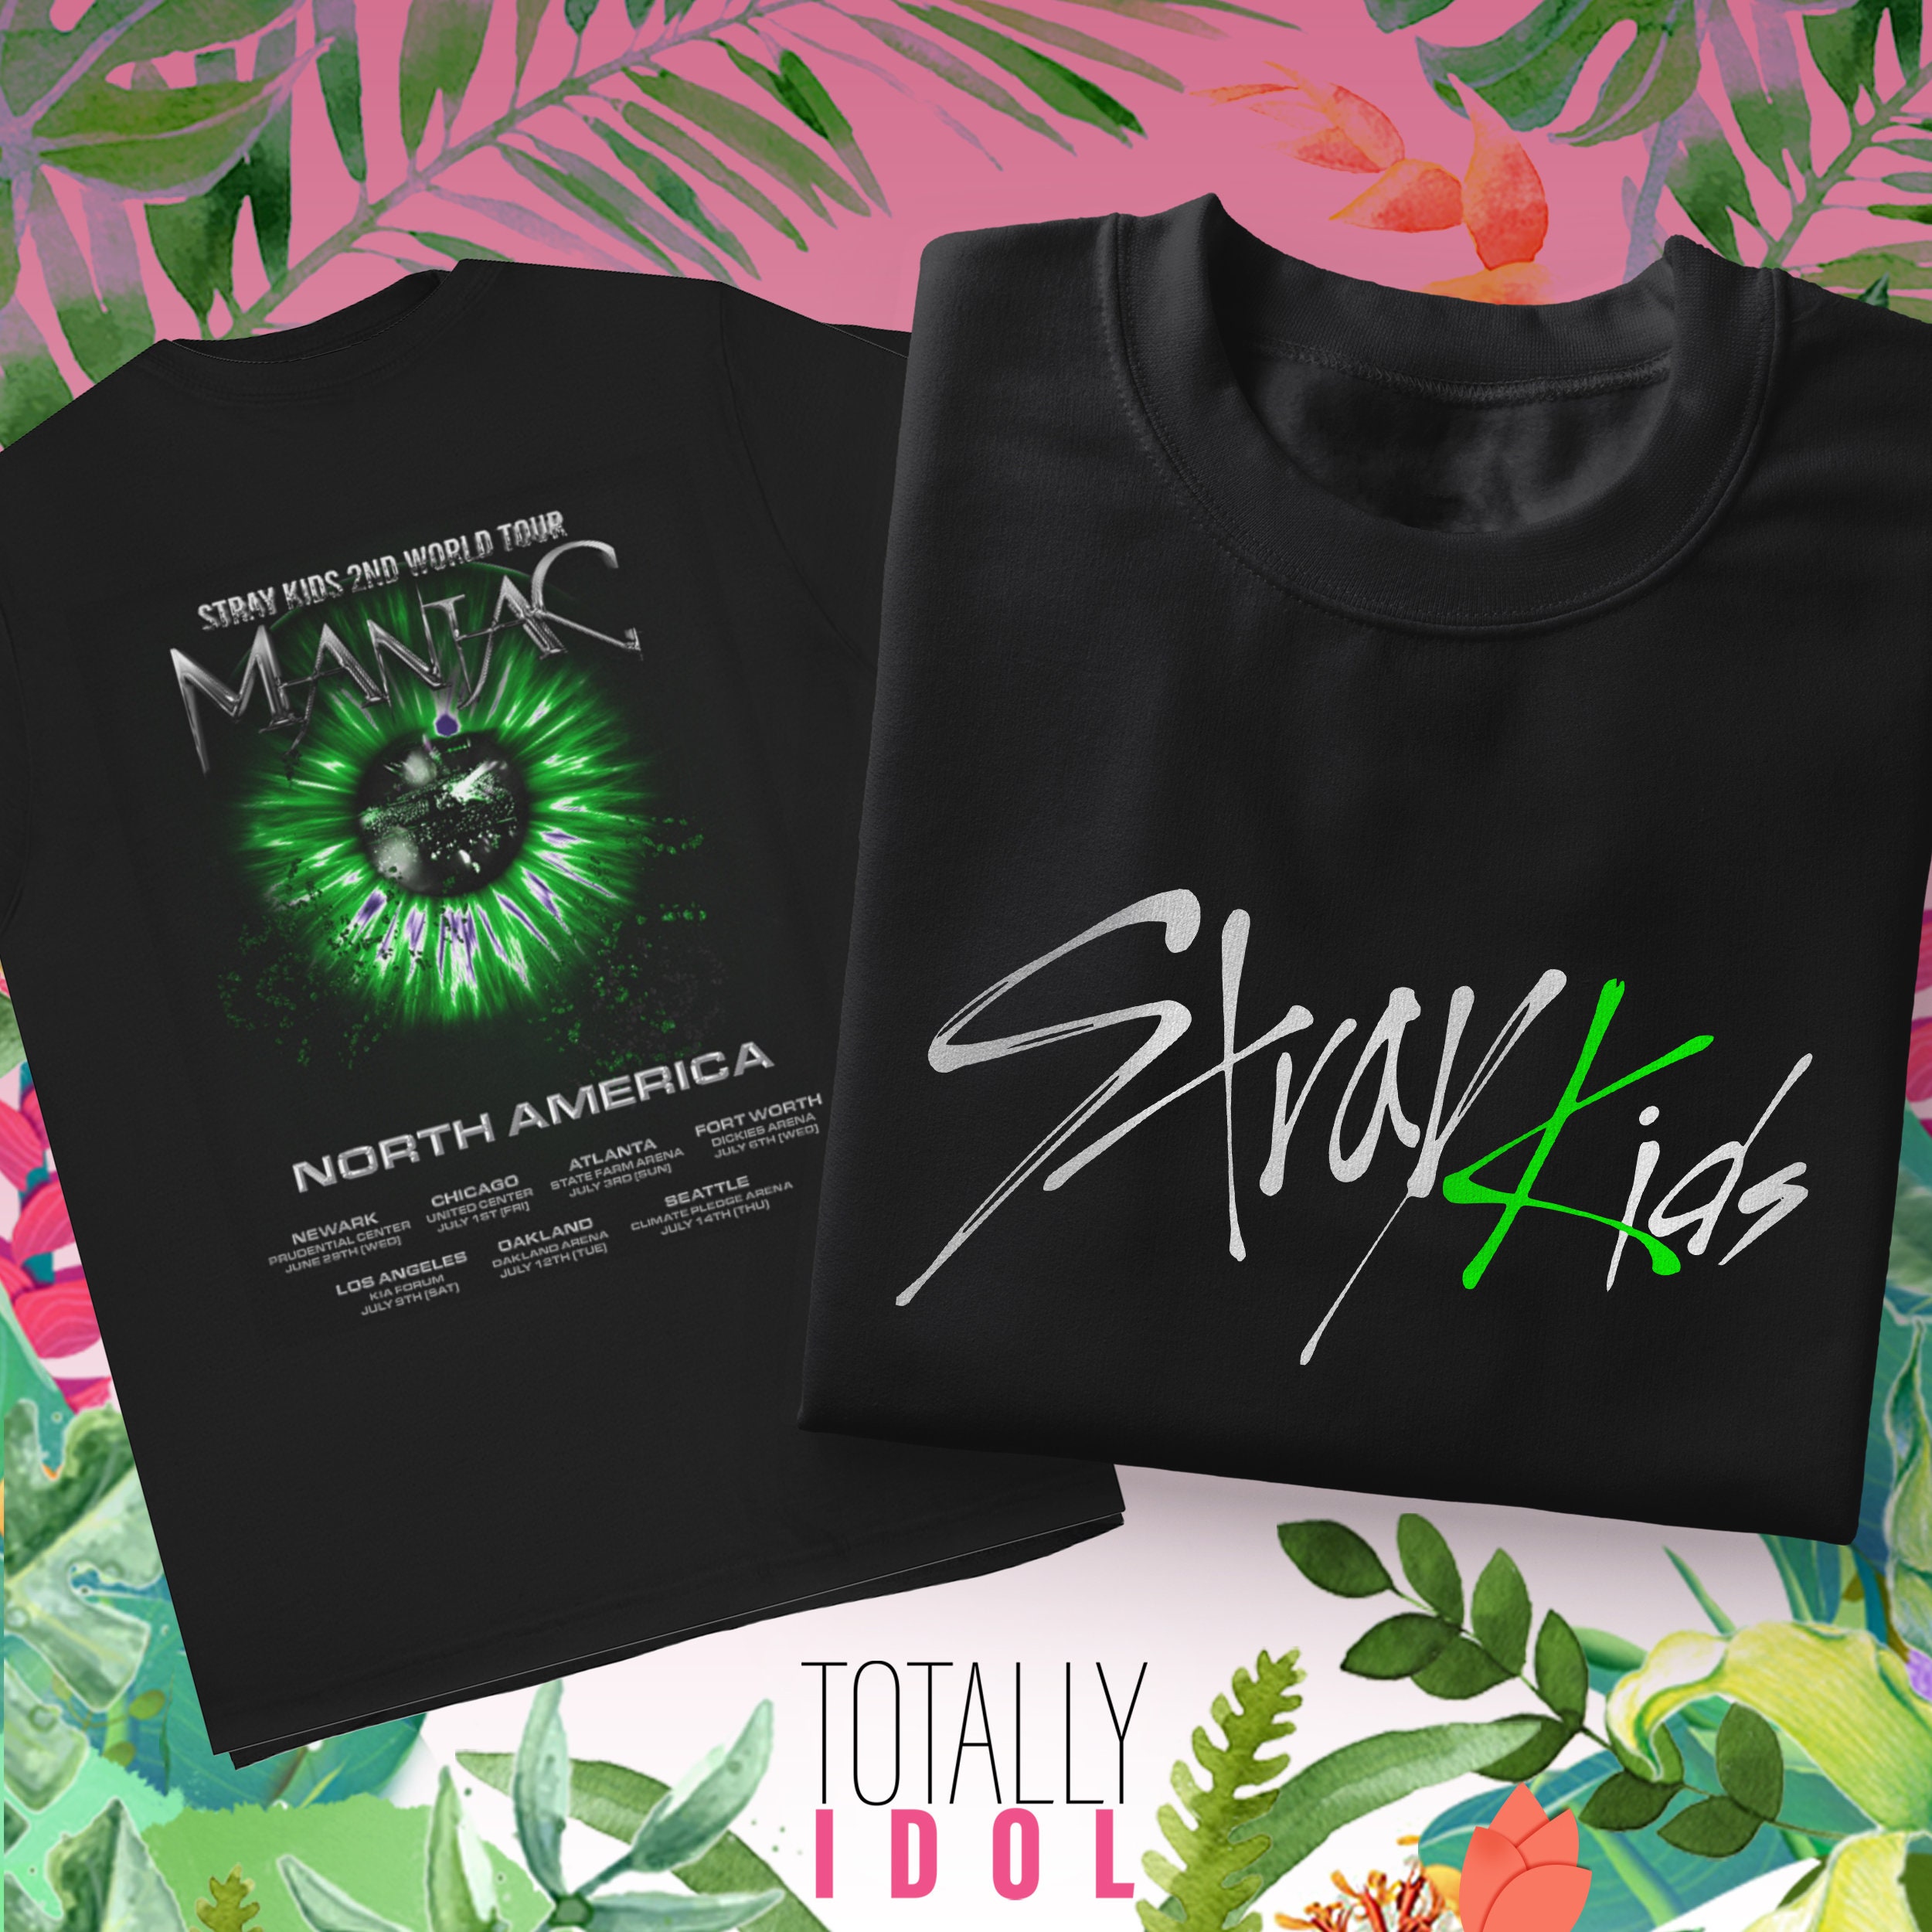 Stray Kids 2nd World Tour “MANIAC” in North America Unisex T-Shirt